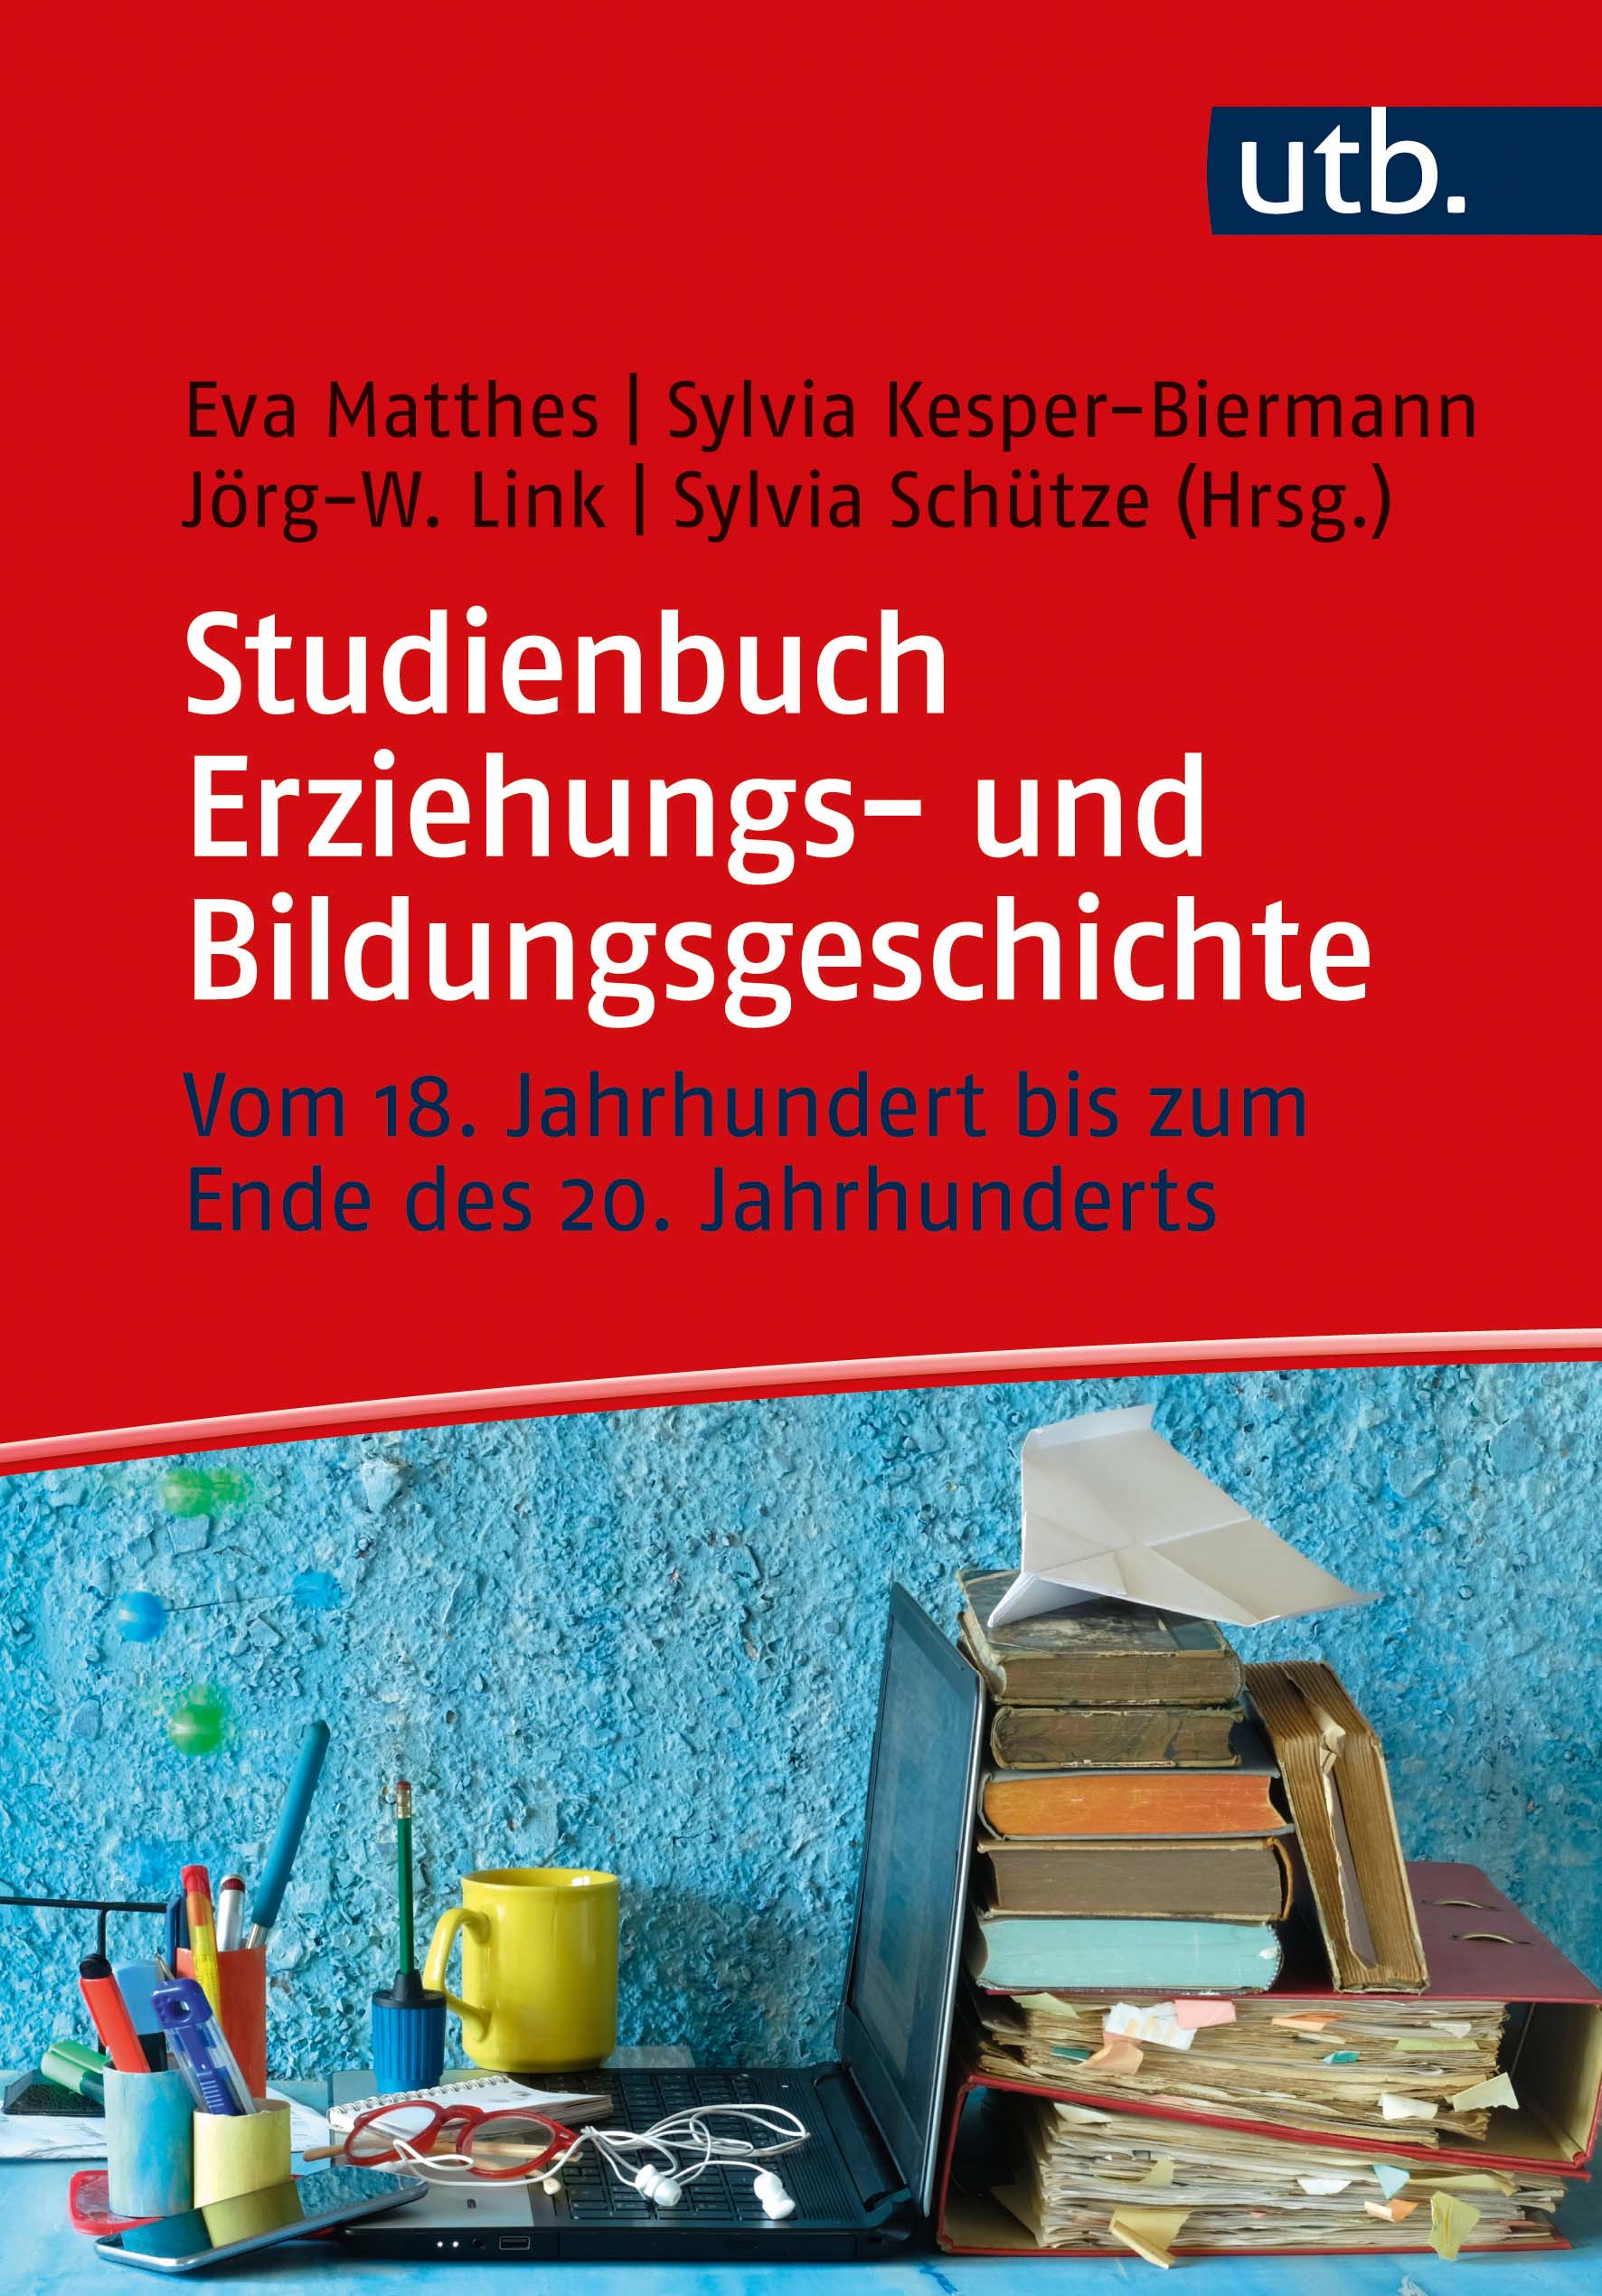 Matthes, Eva  / Kesper-Biermann, Sylvia  / Link, Jörg-W.  / Schütze, Sylvia  (Hg.): Studienbuch Erziehungs- und Bildungsgeschichte